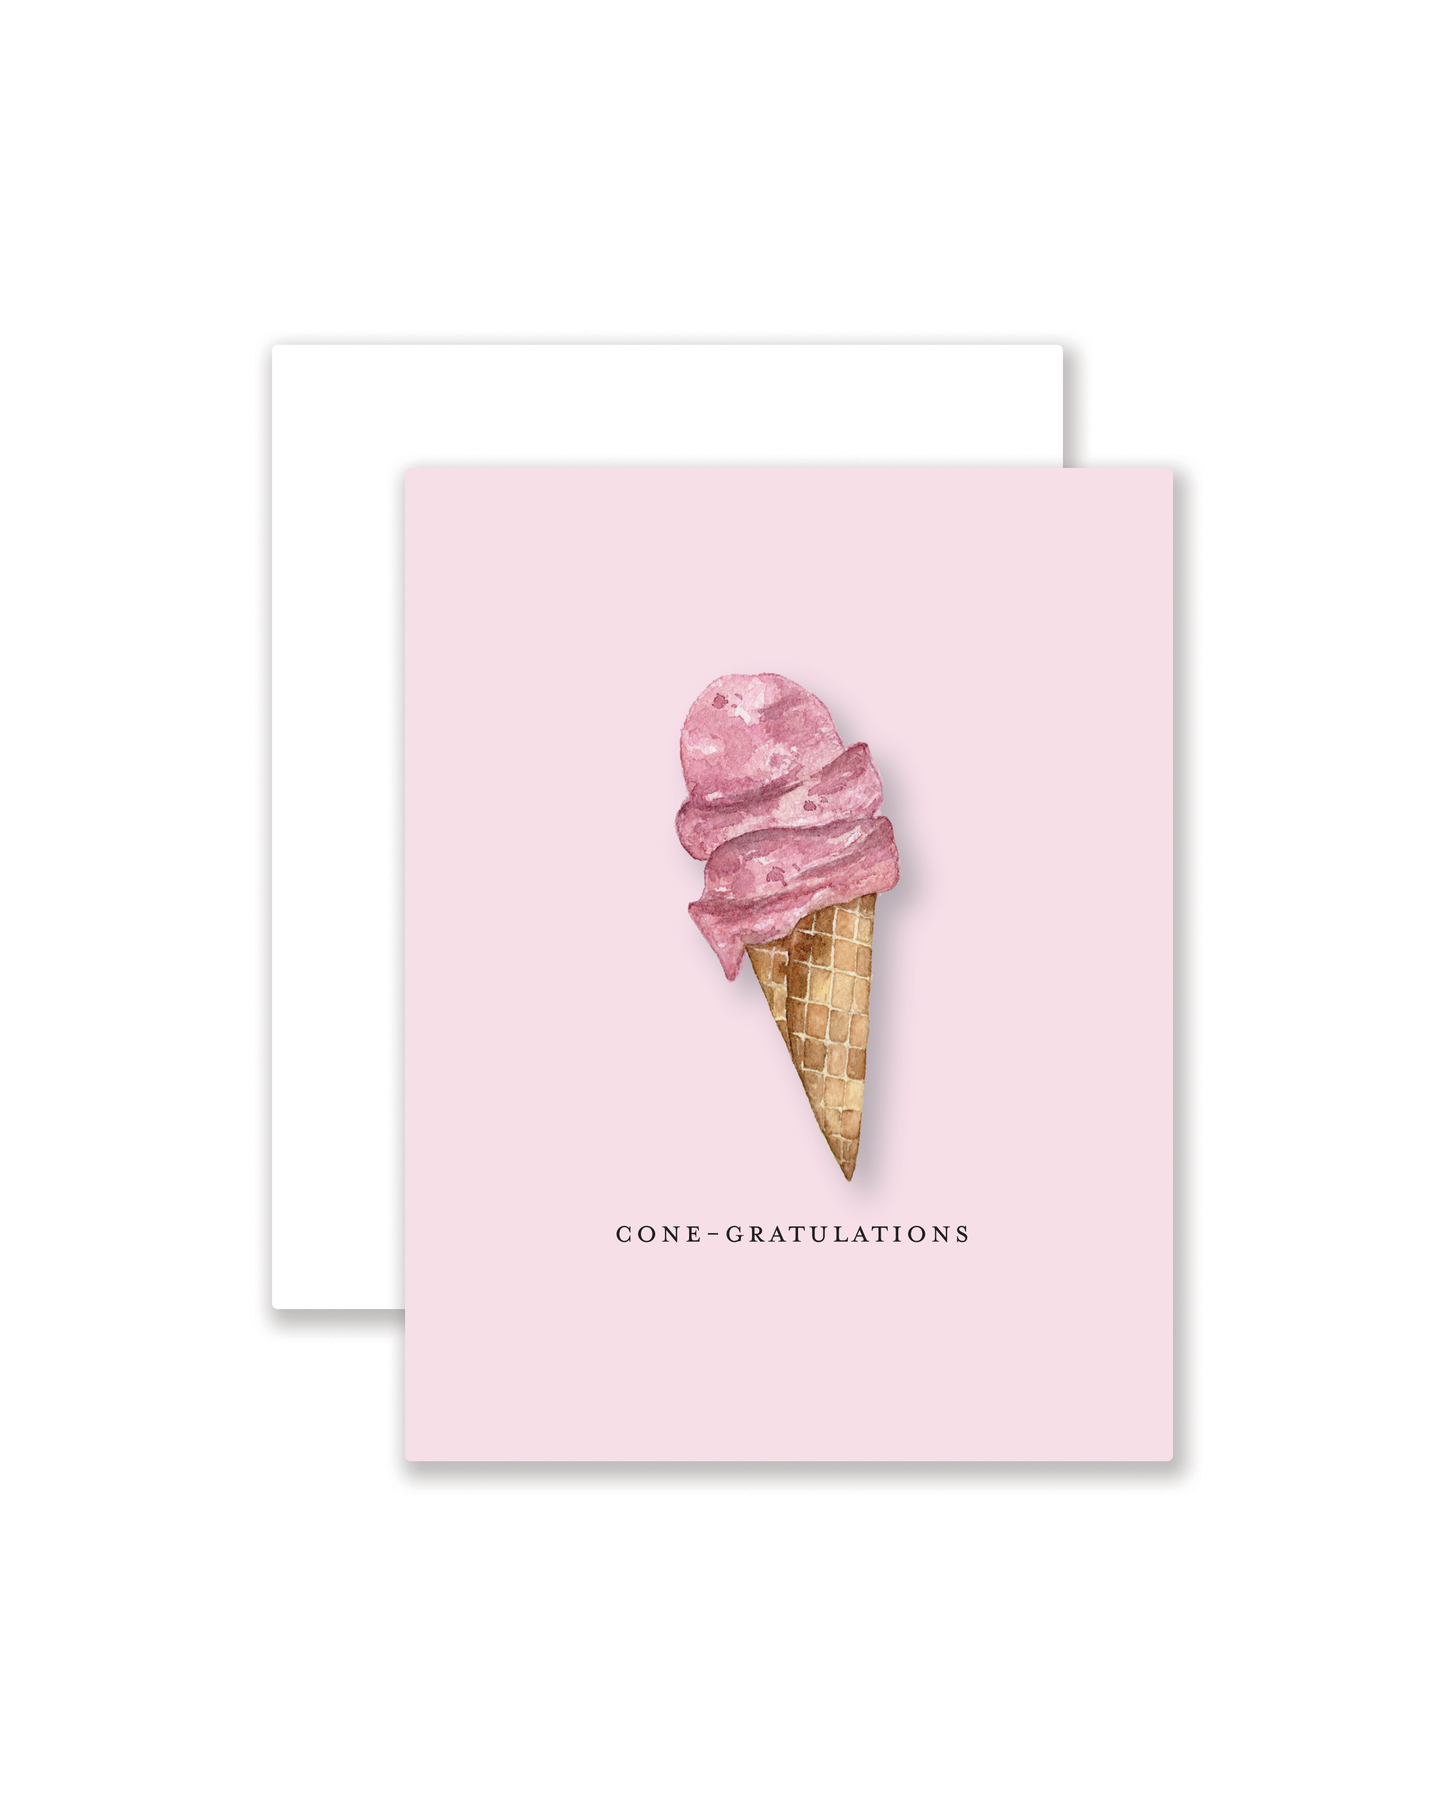 Cone-Gratulations Greeting Card